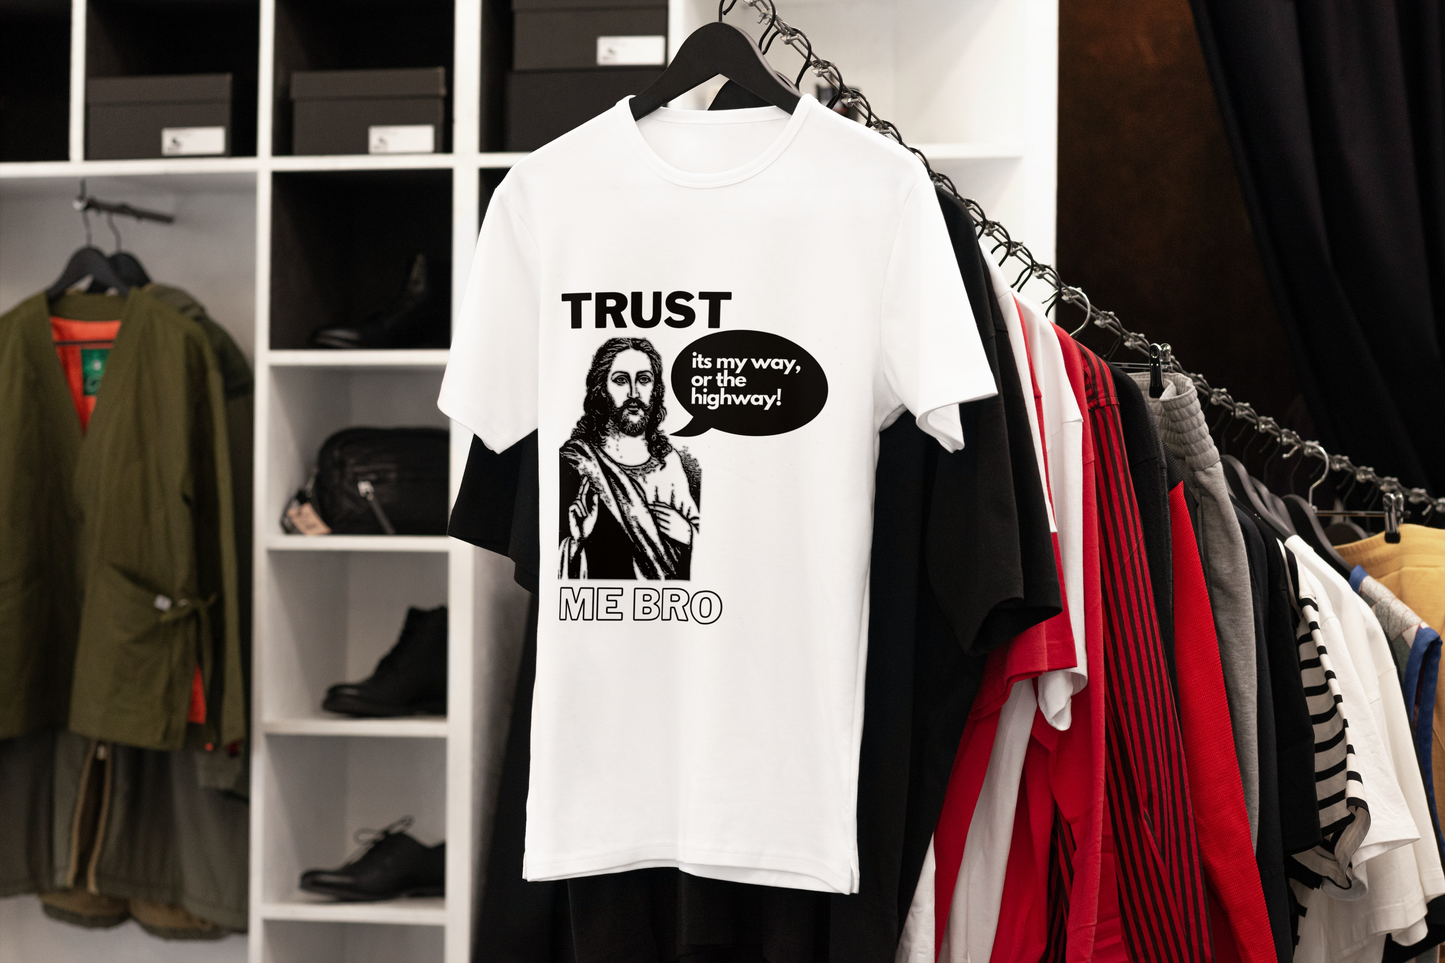 Trust God Bro Shirt, Jesus is the way truth light T-Shirt | Funny Meme Jesus Shirt | Christian Streetwear